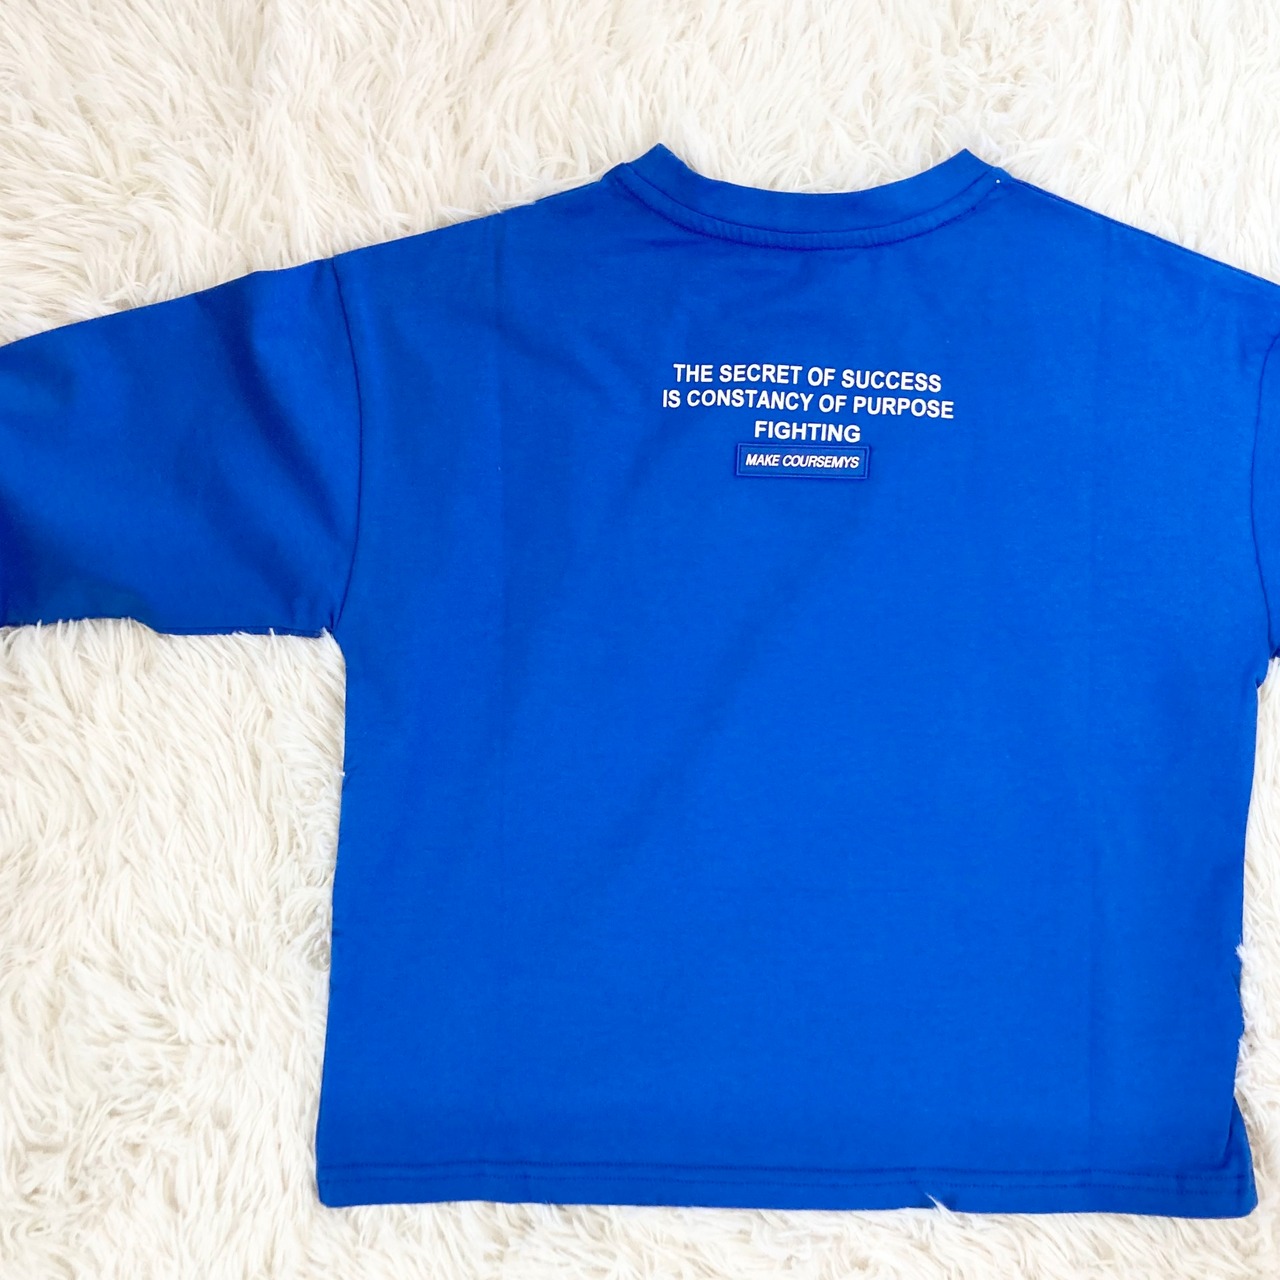 blue長袖Tシャツ501